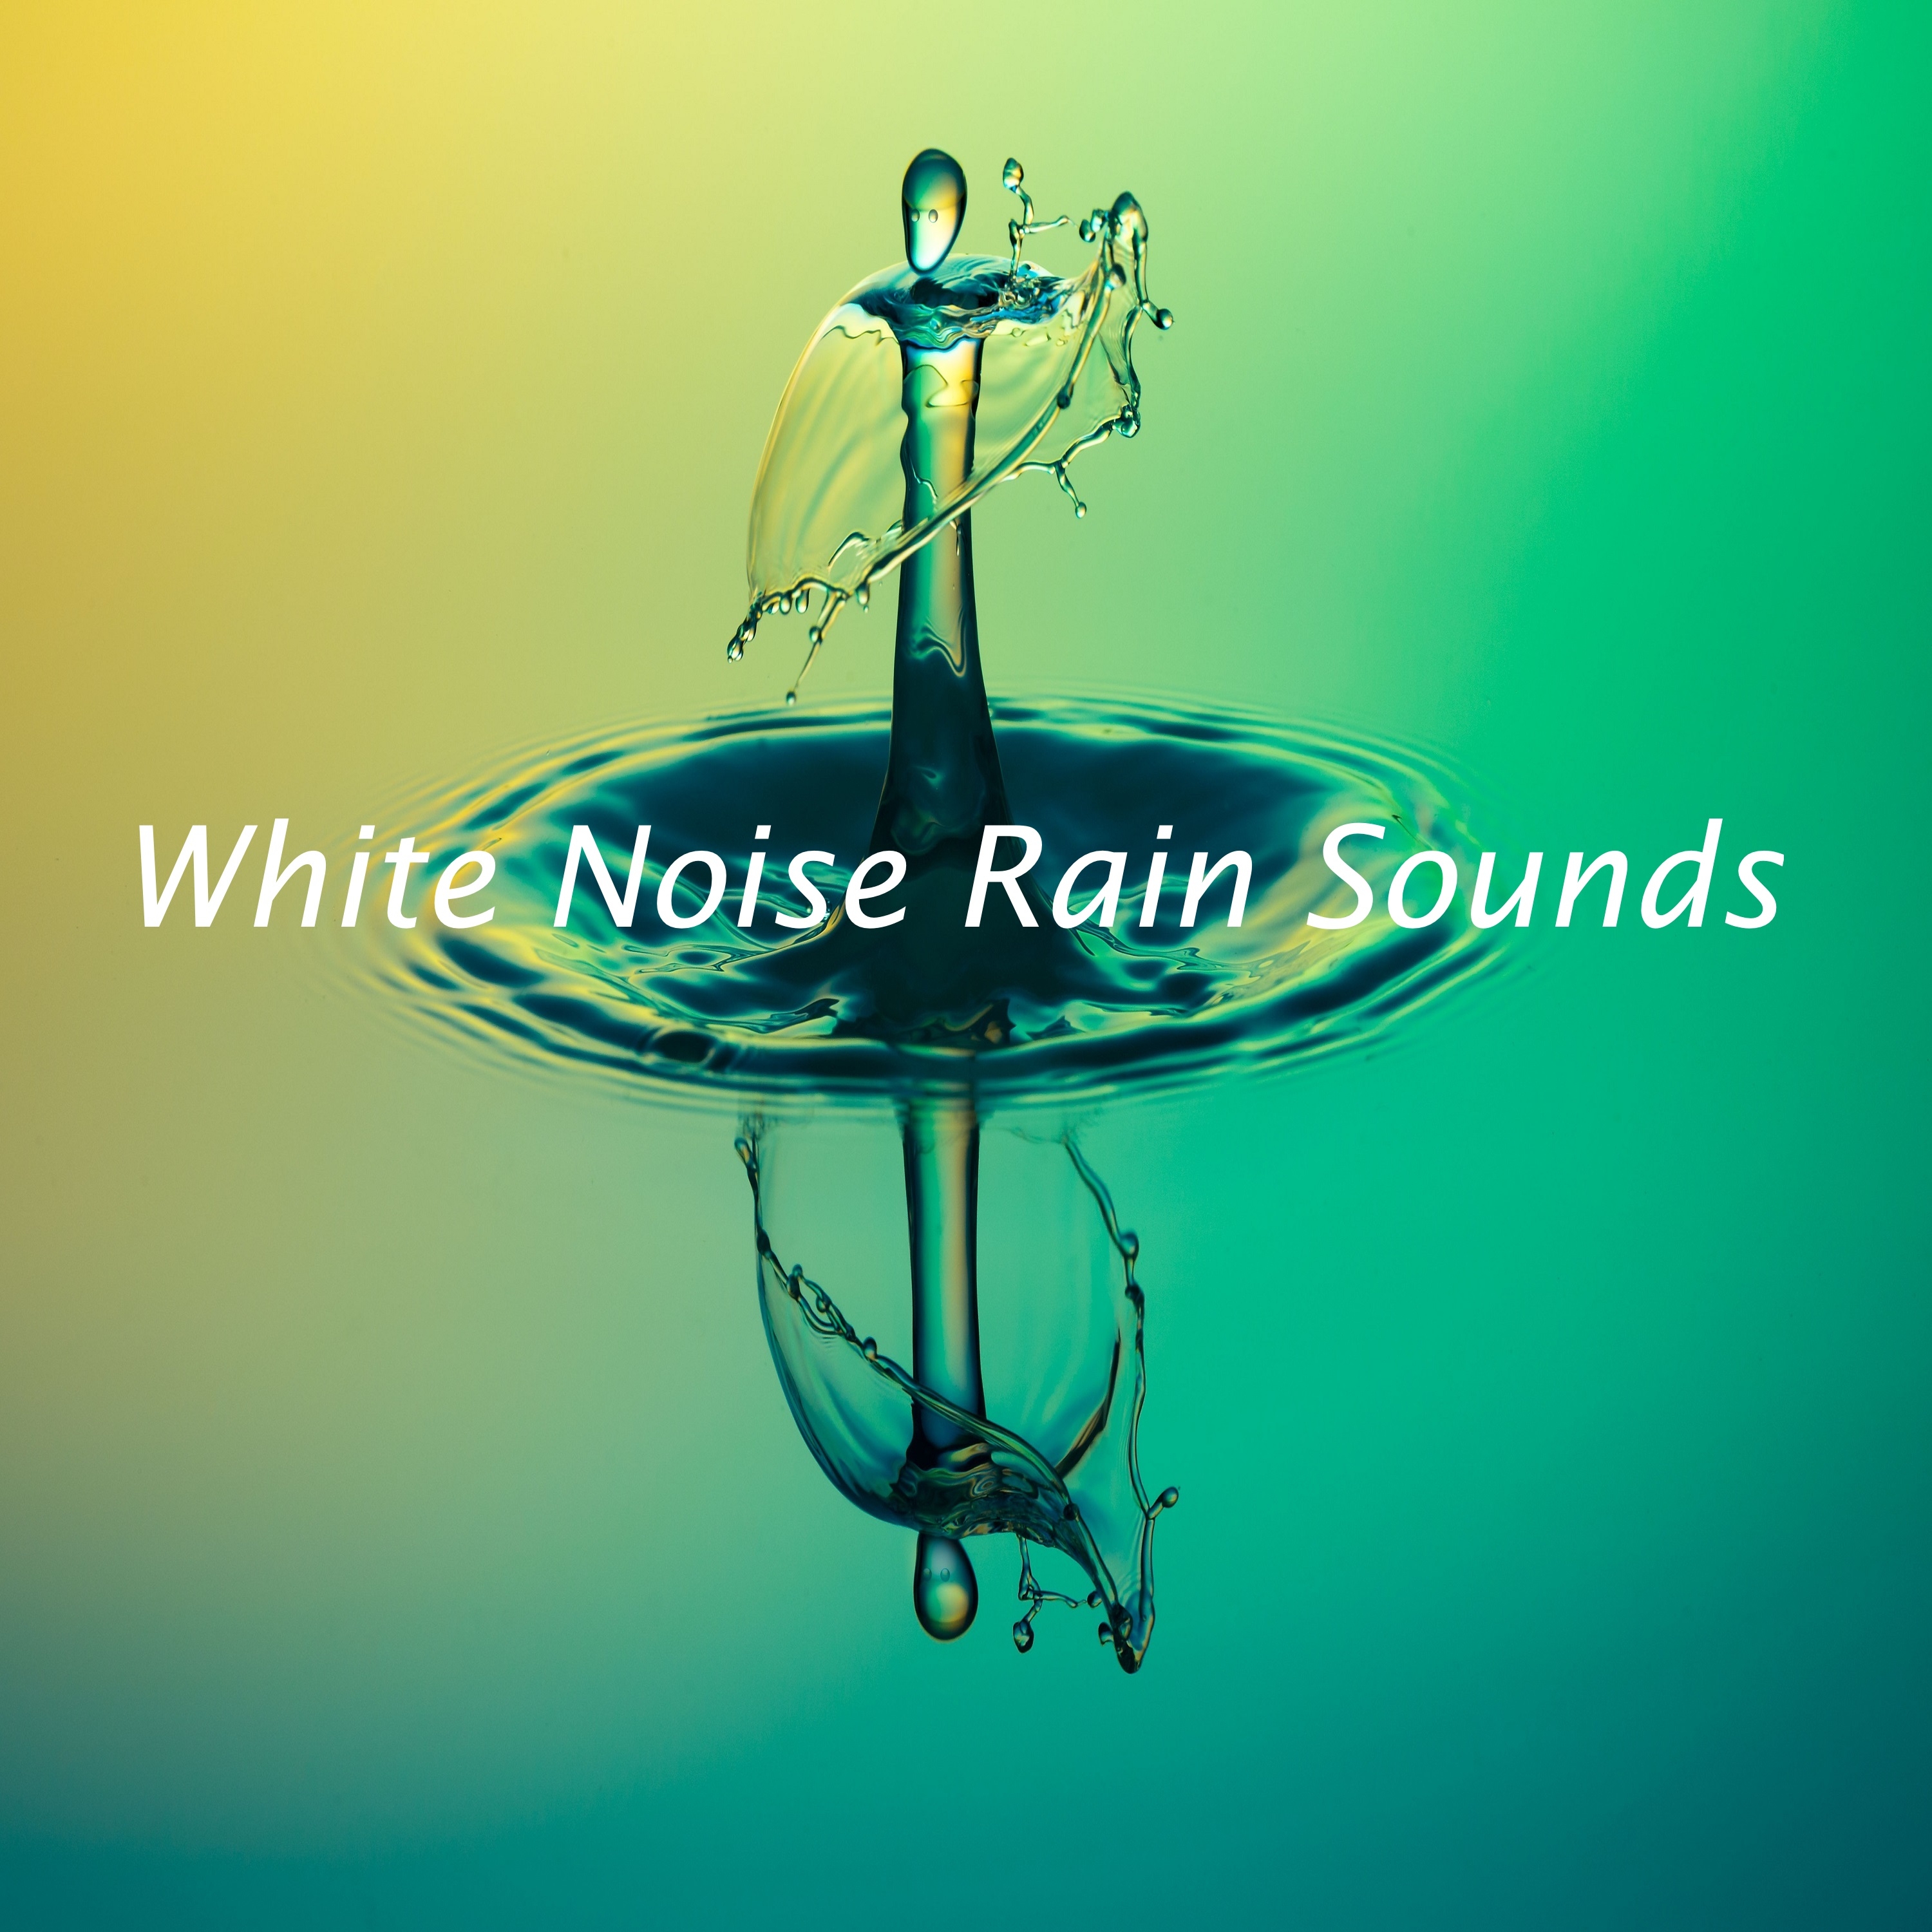 7 White Noise Rain Tracks Designed for Deep Sleep and Wellbeing